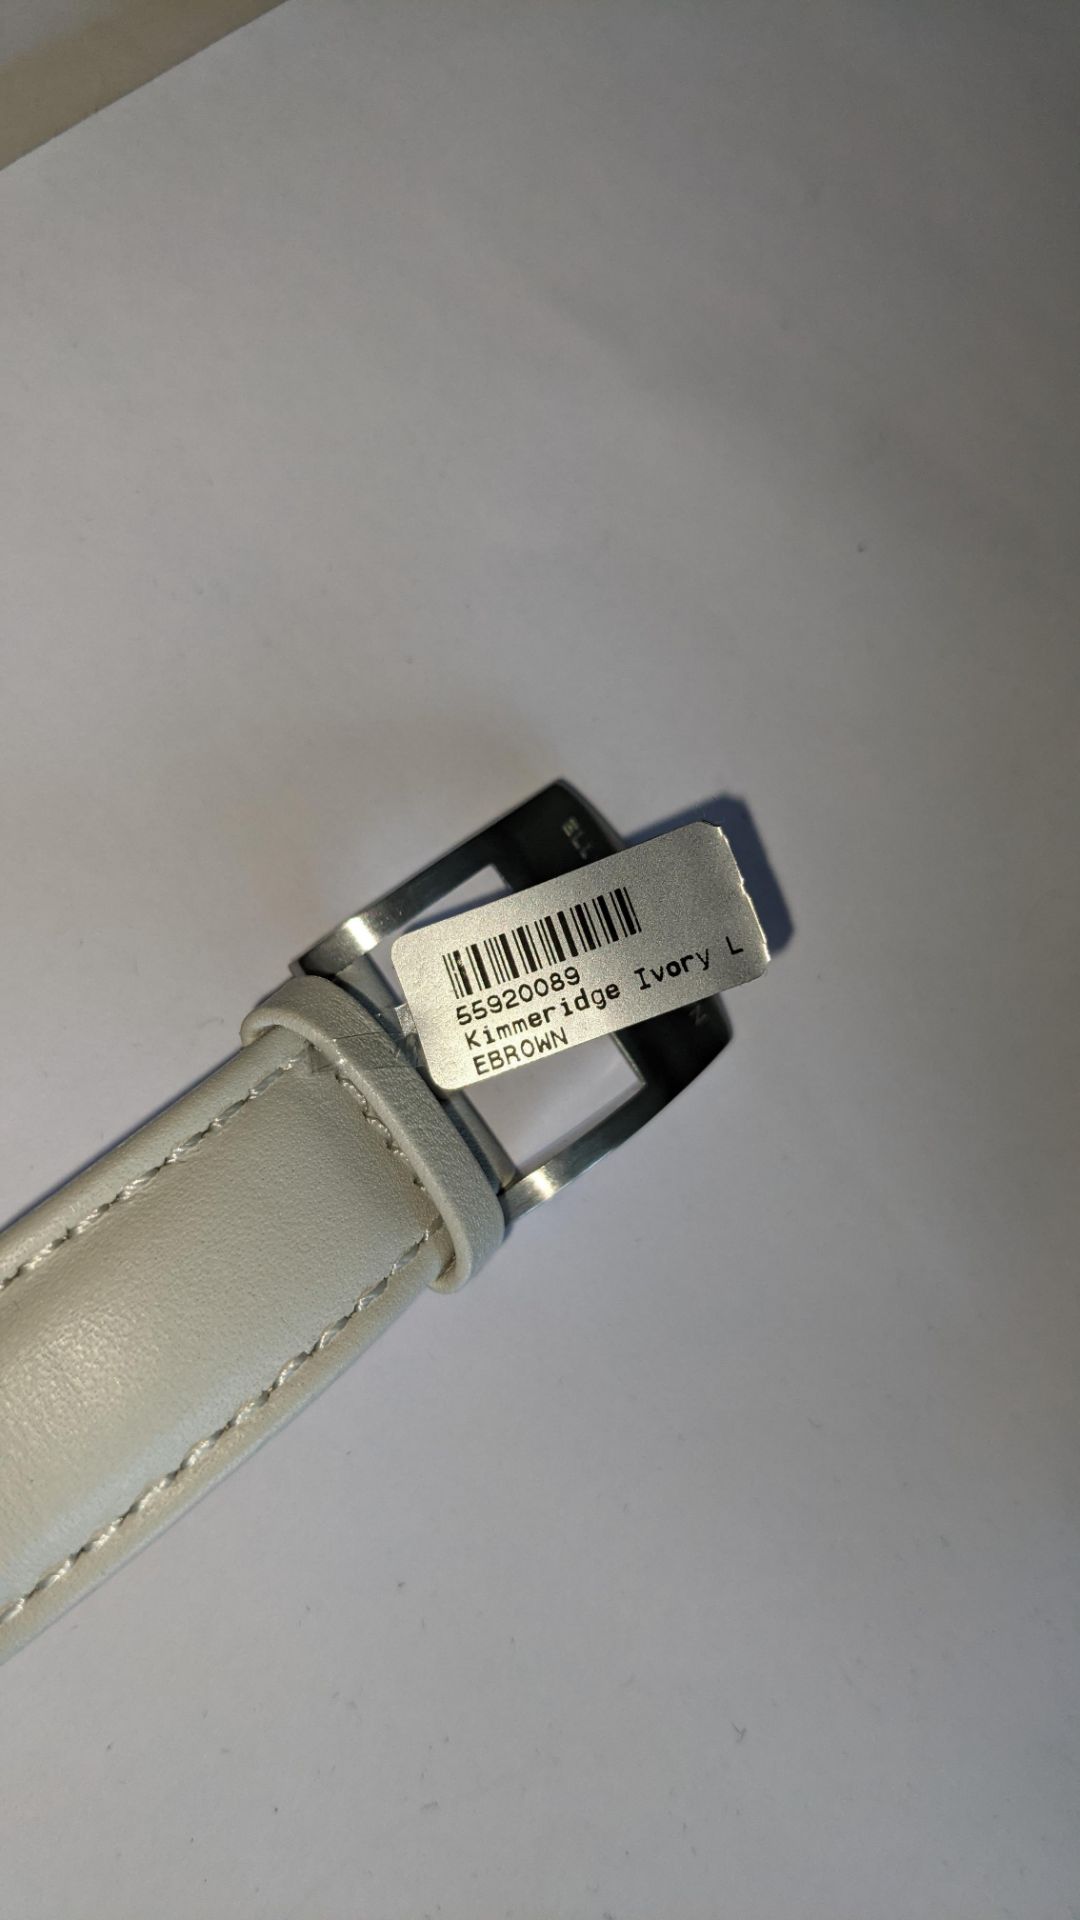 Elliot Brown The Kimmeridge watch, product code 405-008-L54. Stainless steel, 200M water resistant, - Image 16 of 18